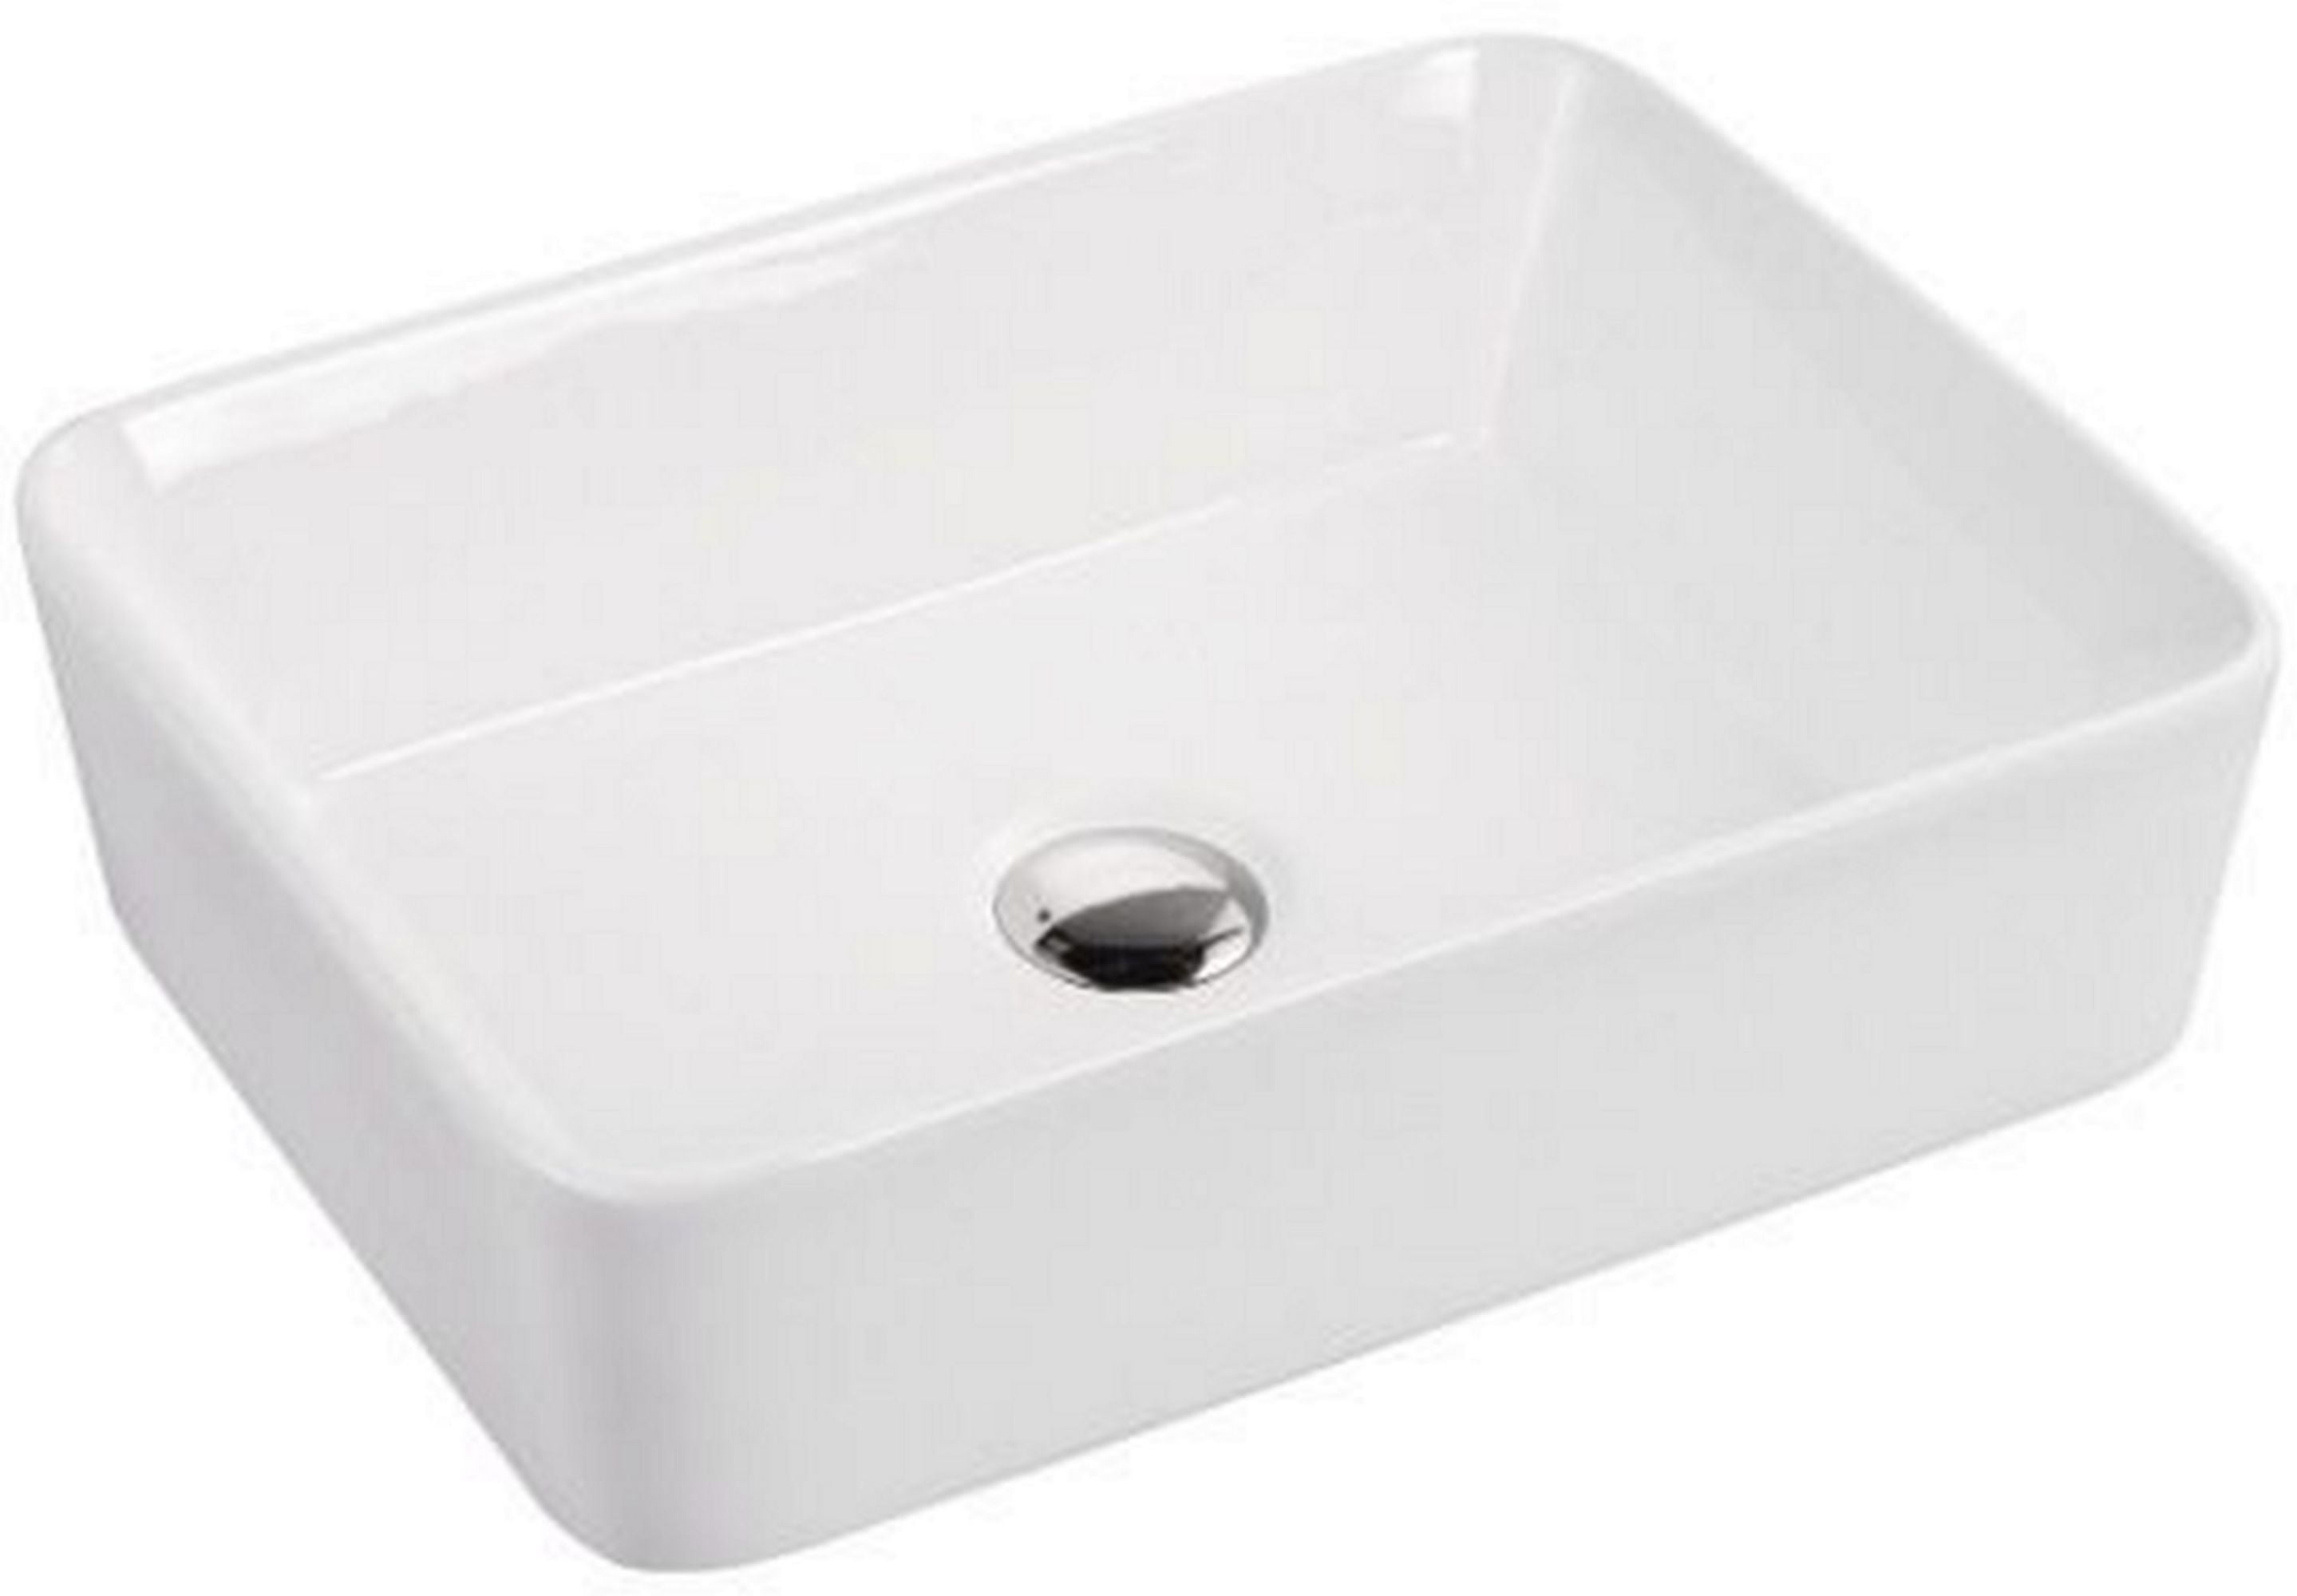 Ccb-285b Mia Over The Counter Vessel Ceramic Basin Sink, Glossy White - 18.87 X 14.56 X 4.93 In.